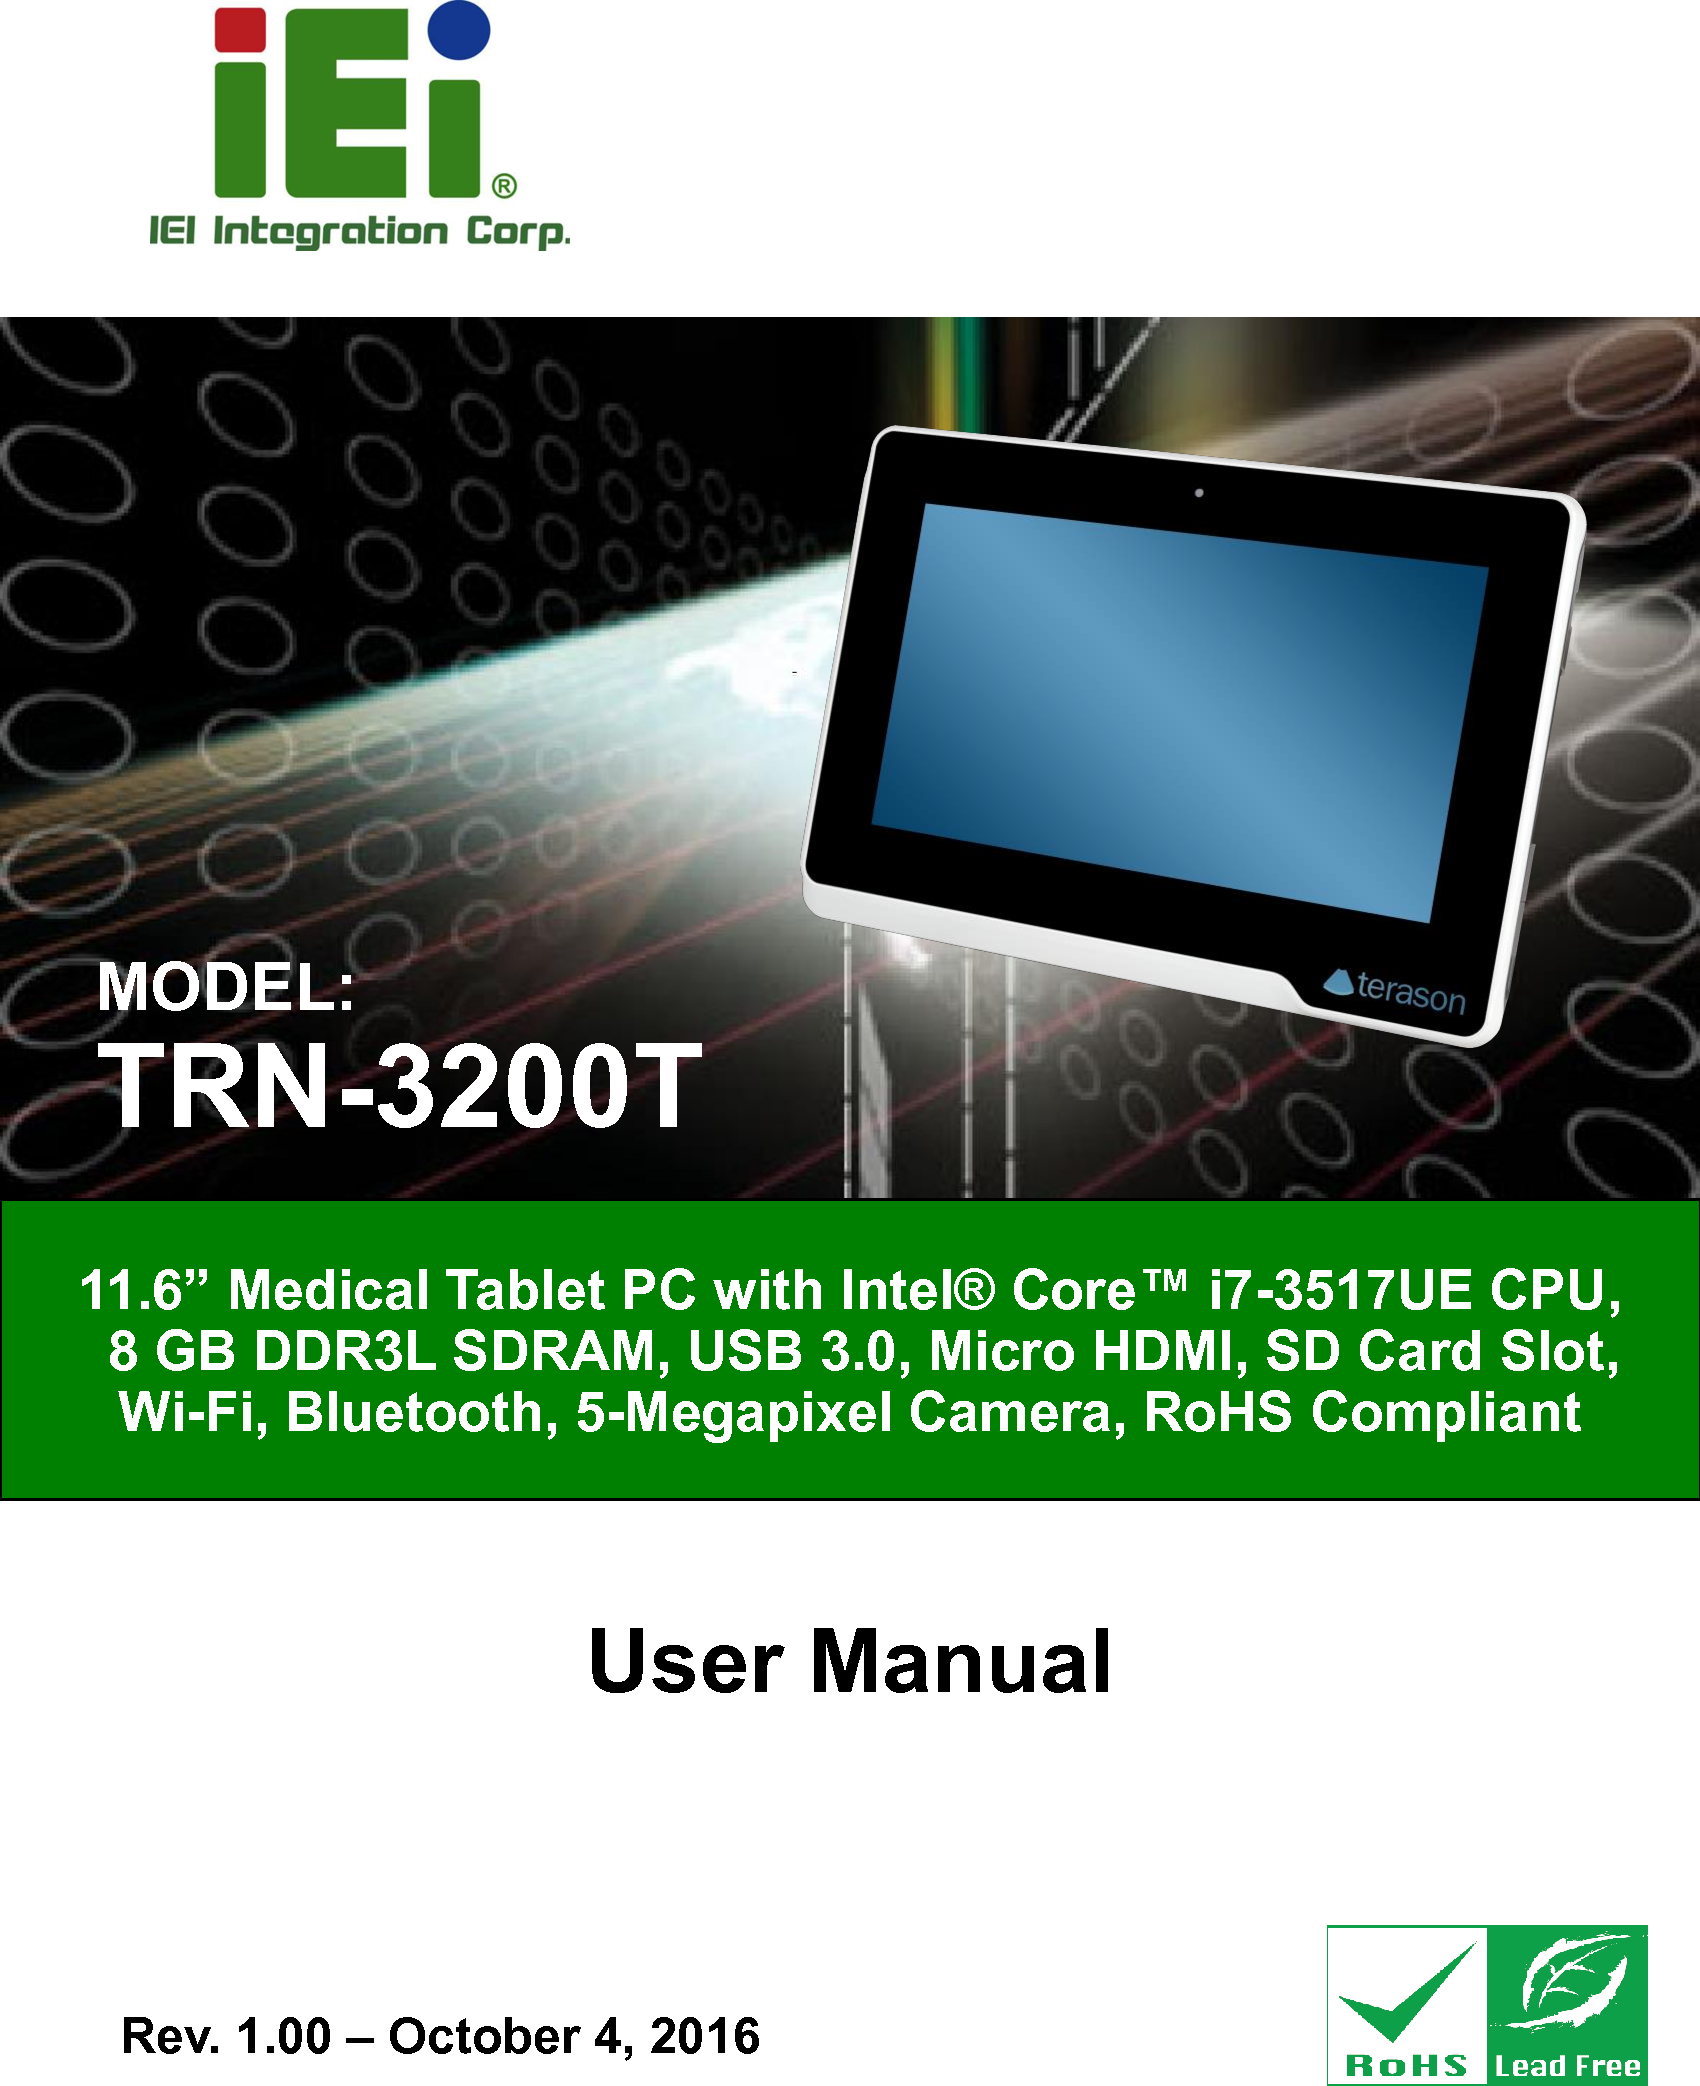   TRN-3200T-R100 Tablet PC Page i User Manual 11.6” Medical Tablet PC with Intel® Core™ i7-3517UE CPU,   8 GB DDR3L SDRAM, USB 3.0, Micro HDMI, SD Card Slot,   Wi-Fi, Bluetooth, 5-Megapixel Camera, RoHS Compliant  Rev. 1.00 – October 4, 2016 MODEL: TRN-3200T 